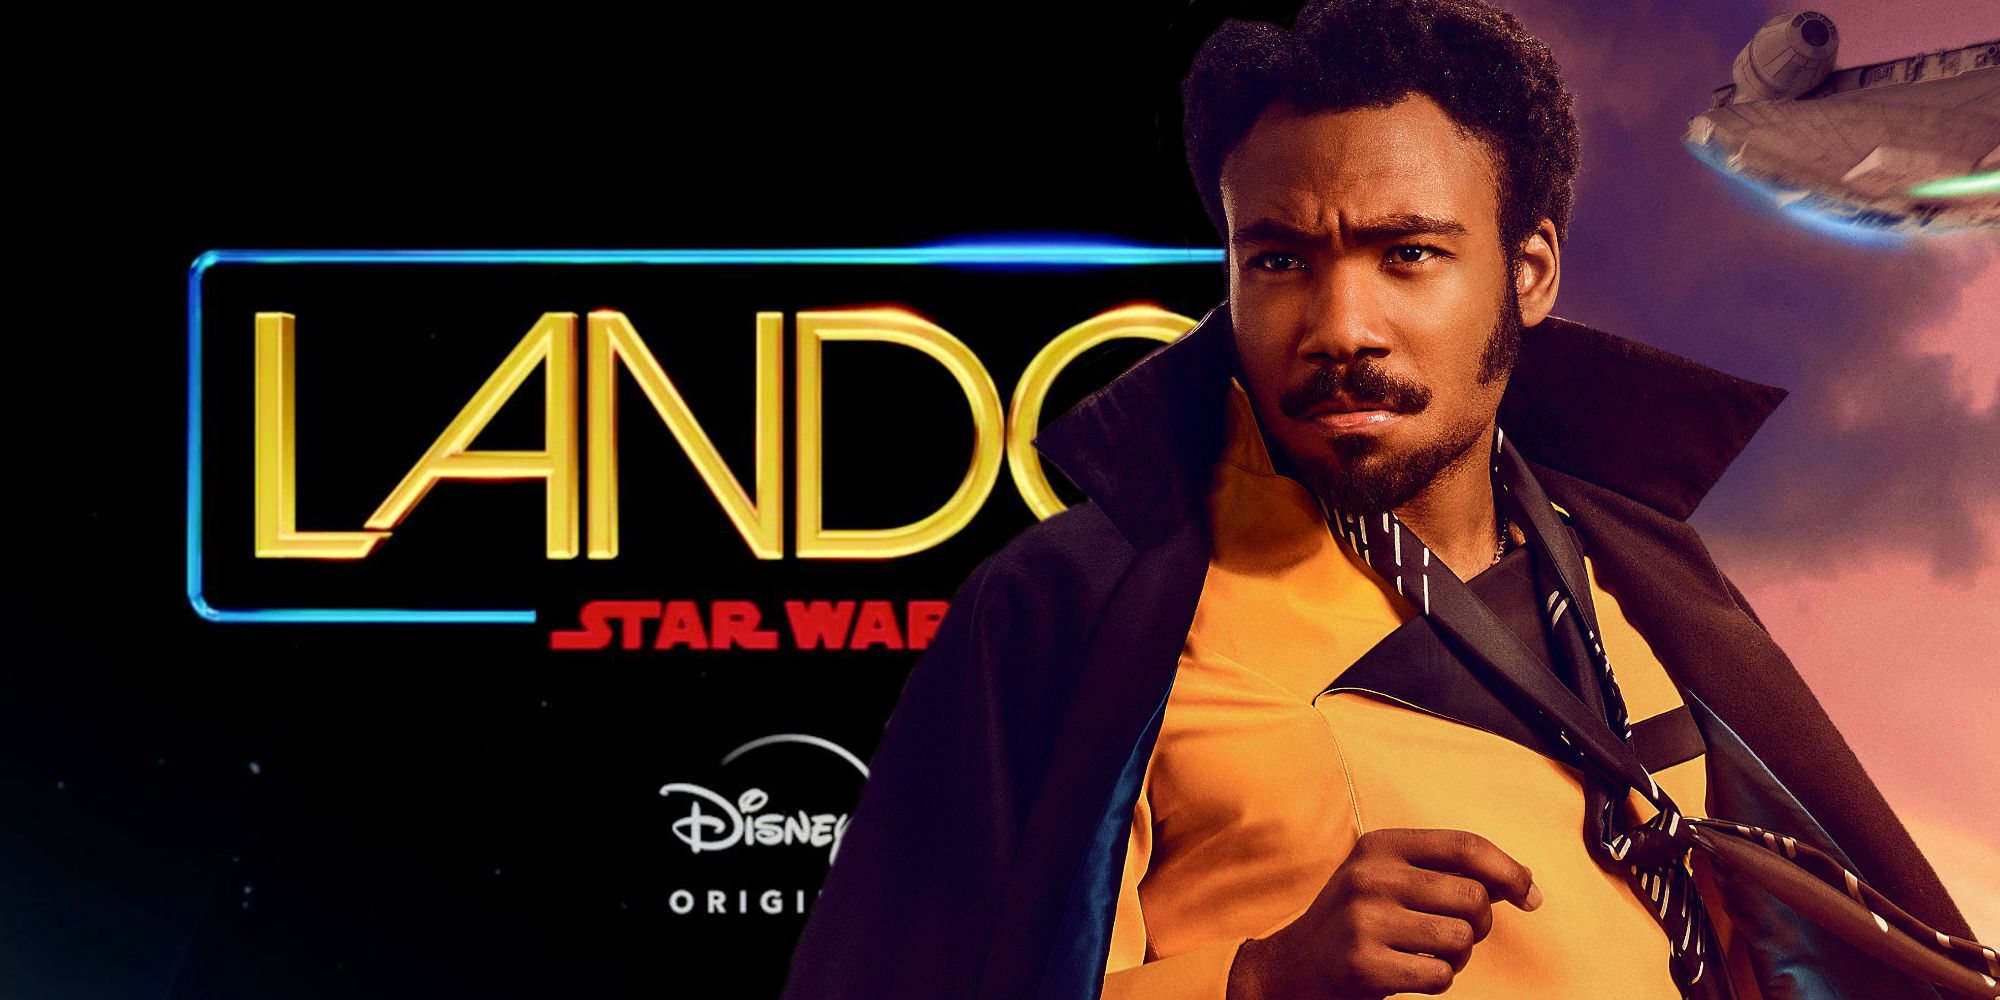 The Lando show logo next to Donald Glover as Lando Calrissian from Solo: A Star Wars Story